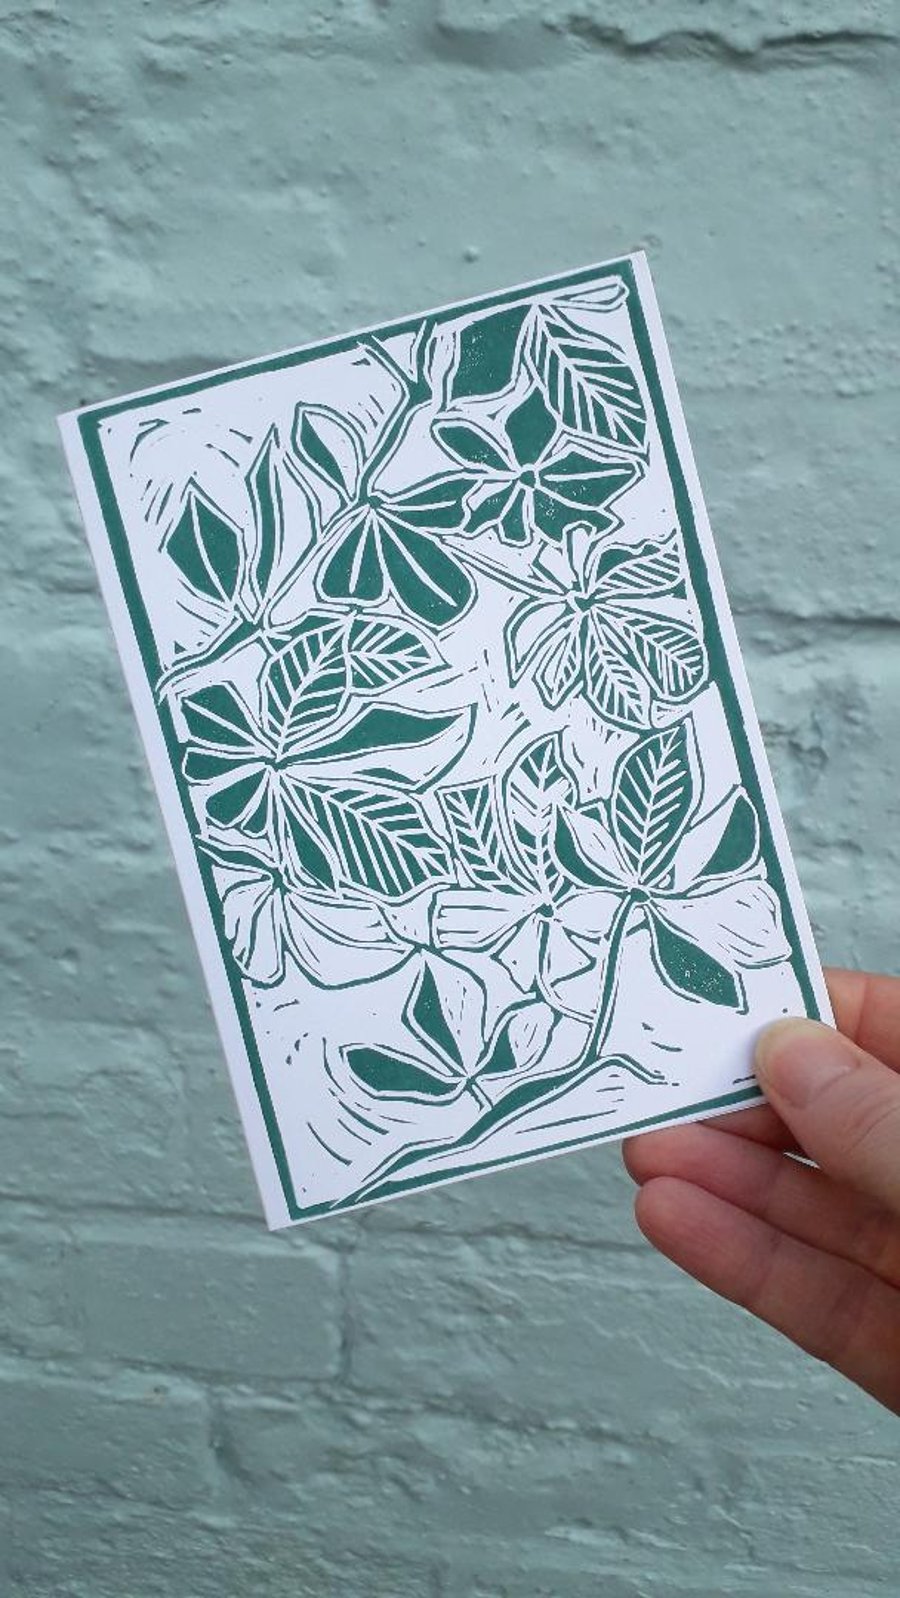 'Underneath the Trees' Greetings Card, Green Lino Print